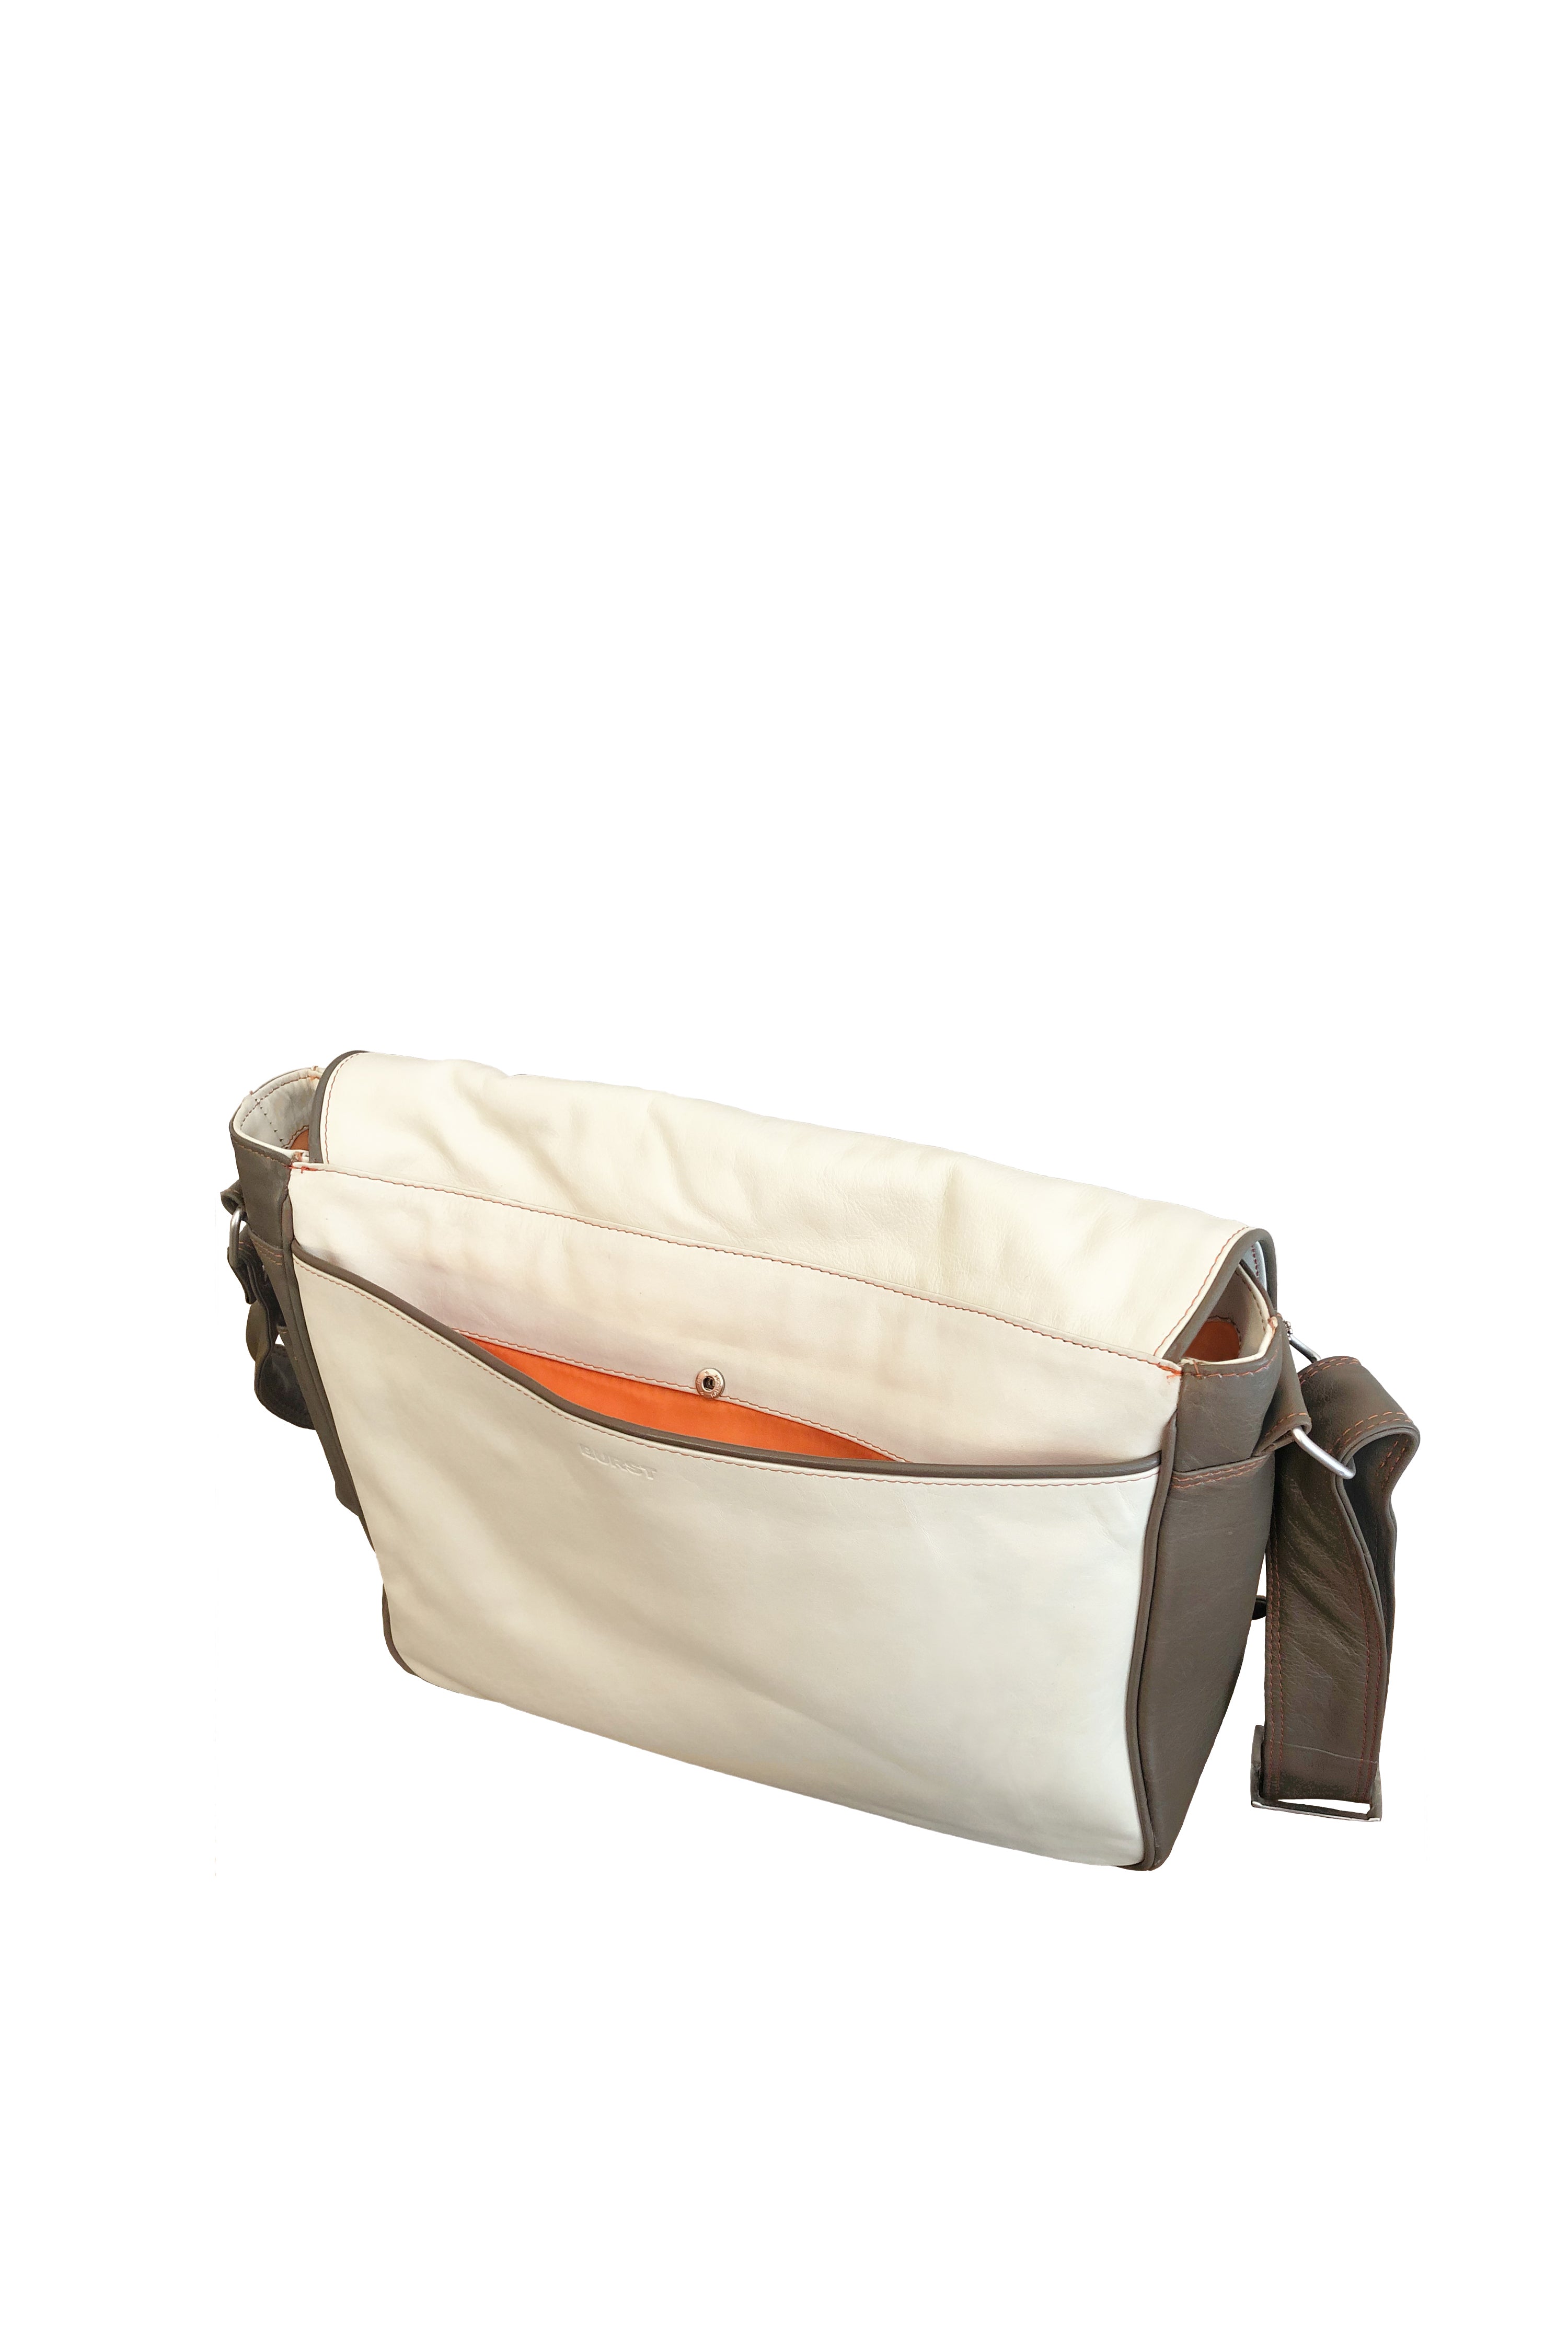 Olive & cream pebbled leather messenger bag, vivid orange interior. Padded cross body strap.